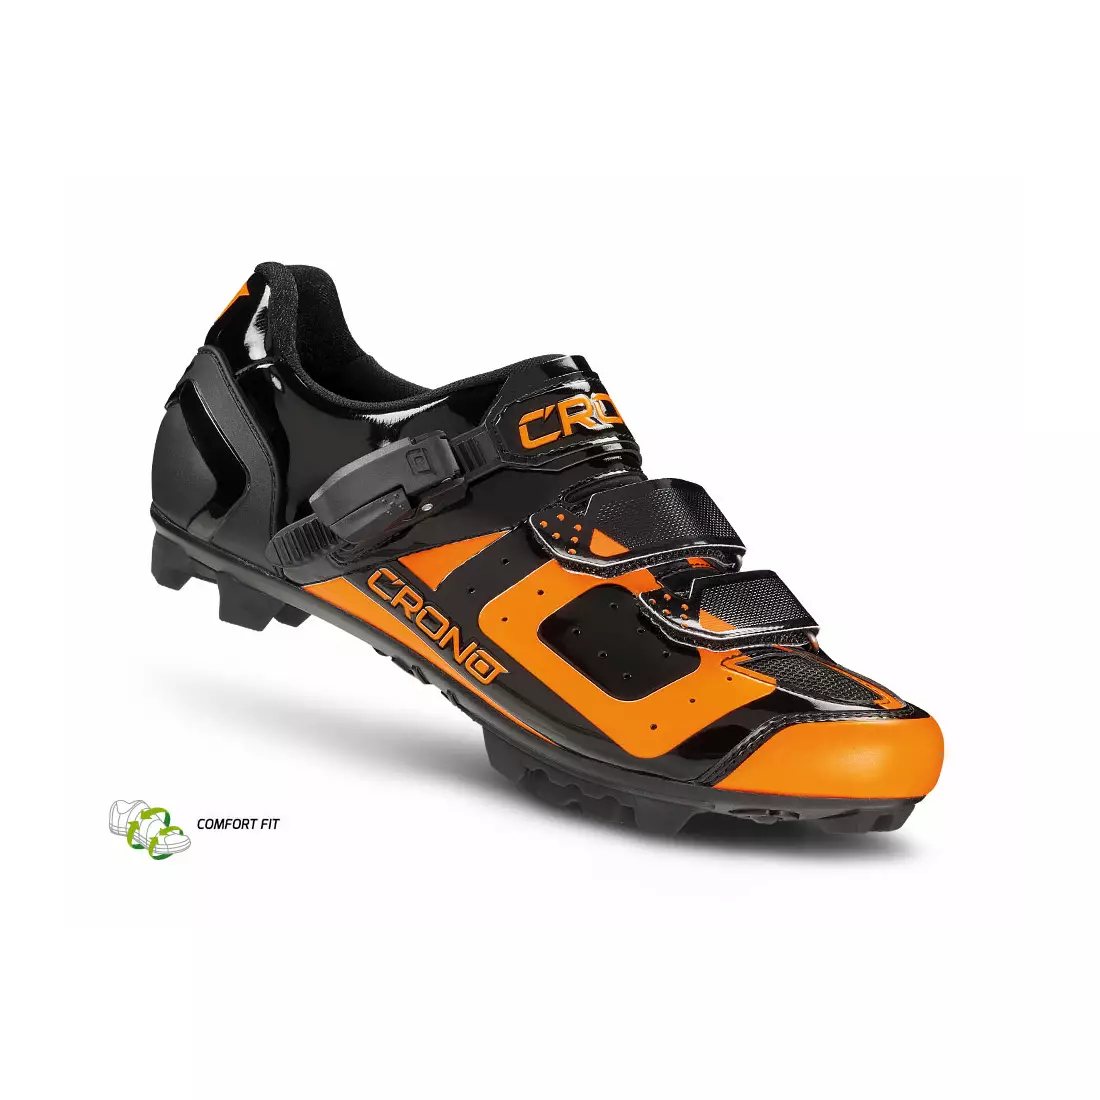 CRONO CX3 nylon - MTB cyklistická obuv, čierno-oranžová fluo